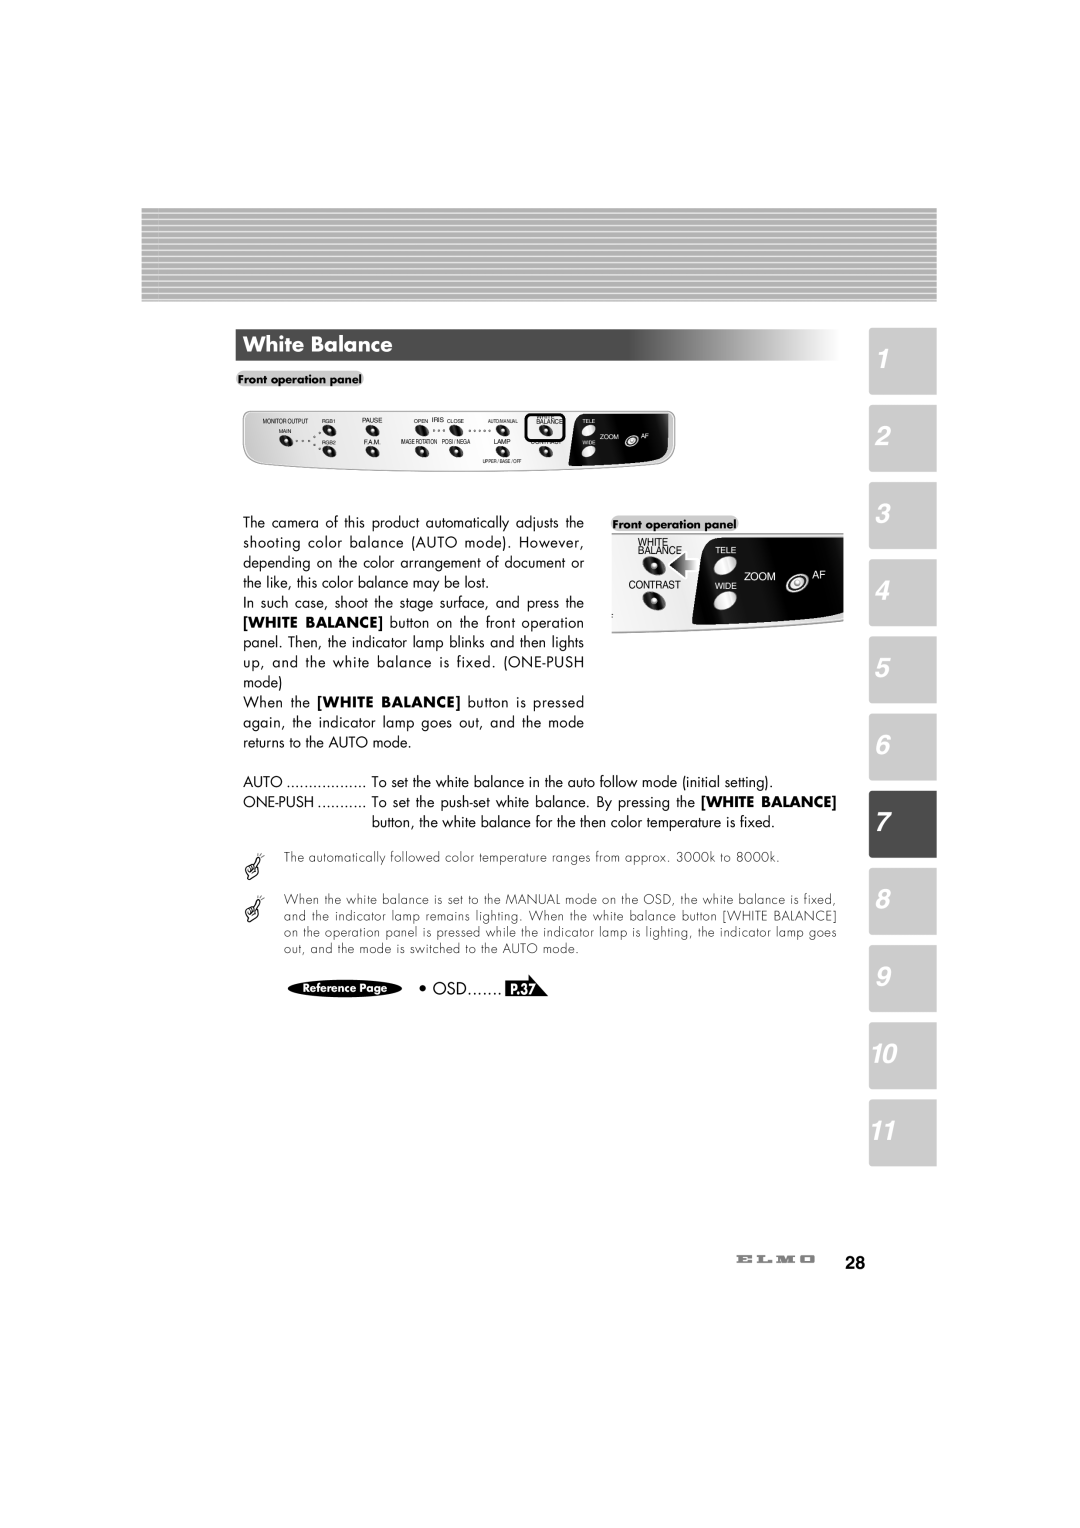 Elmo HV-7100SX instruction manual White Balance 